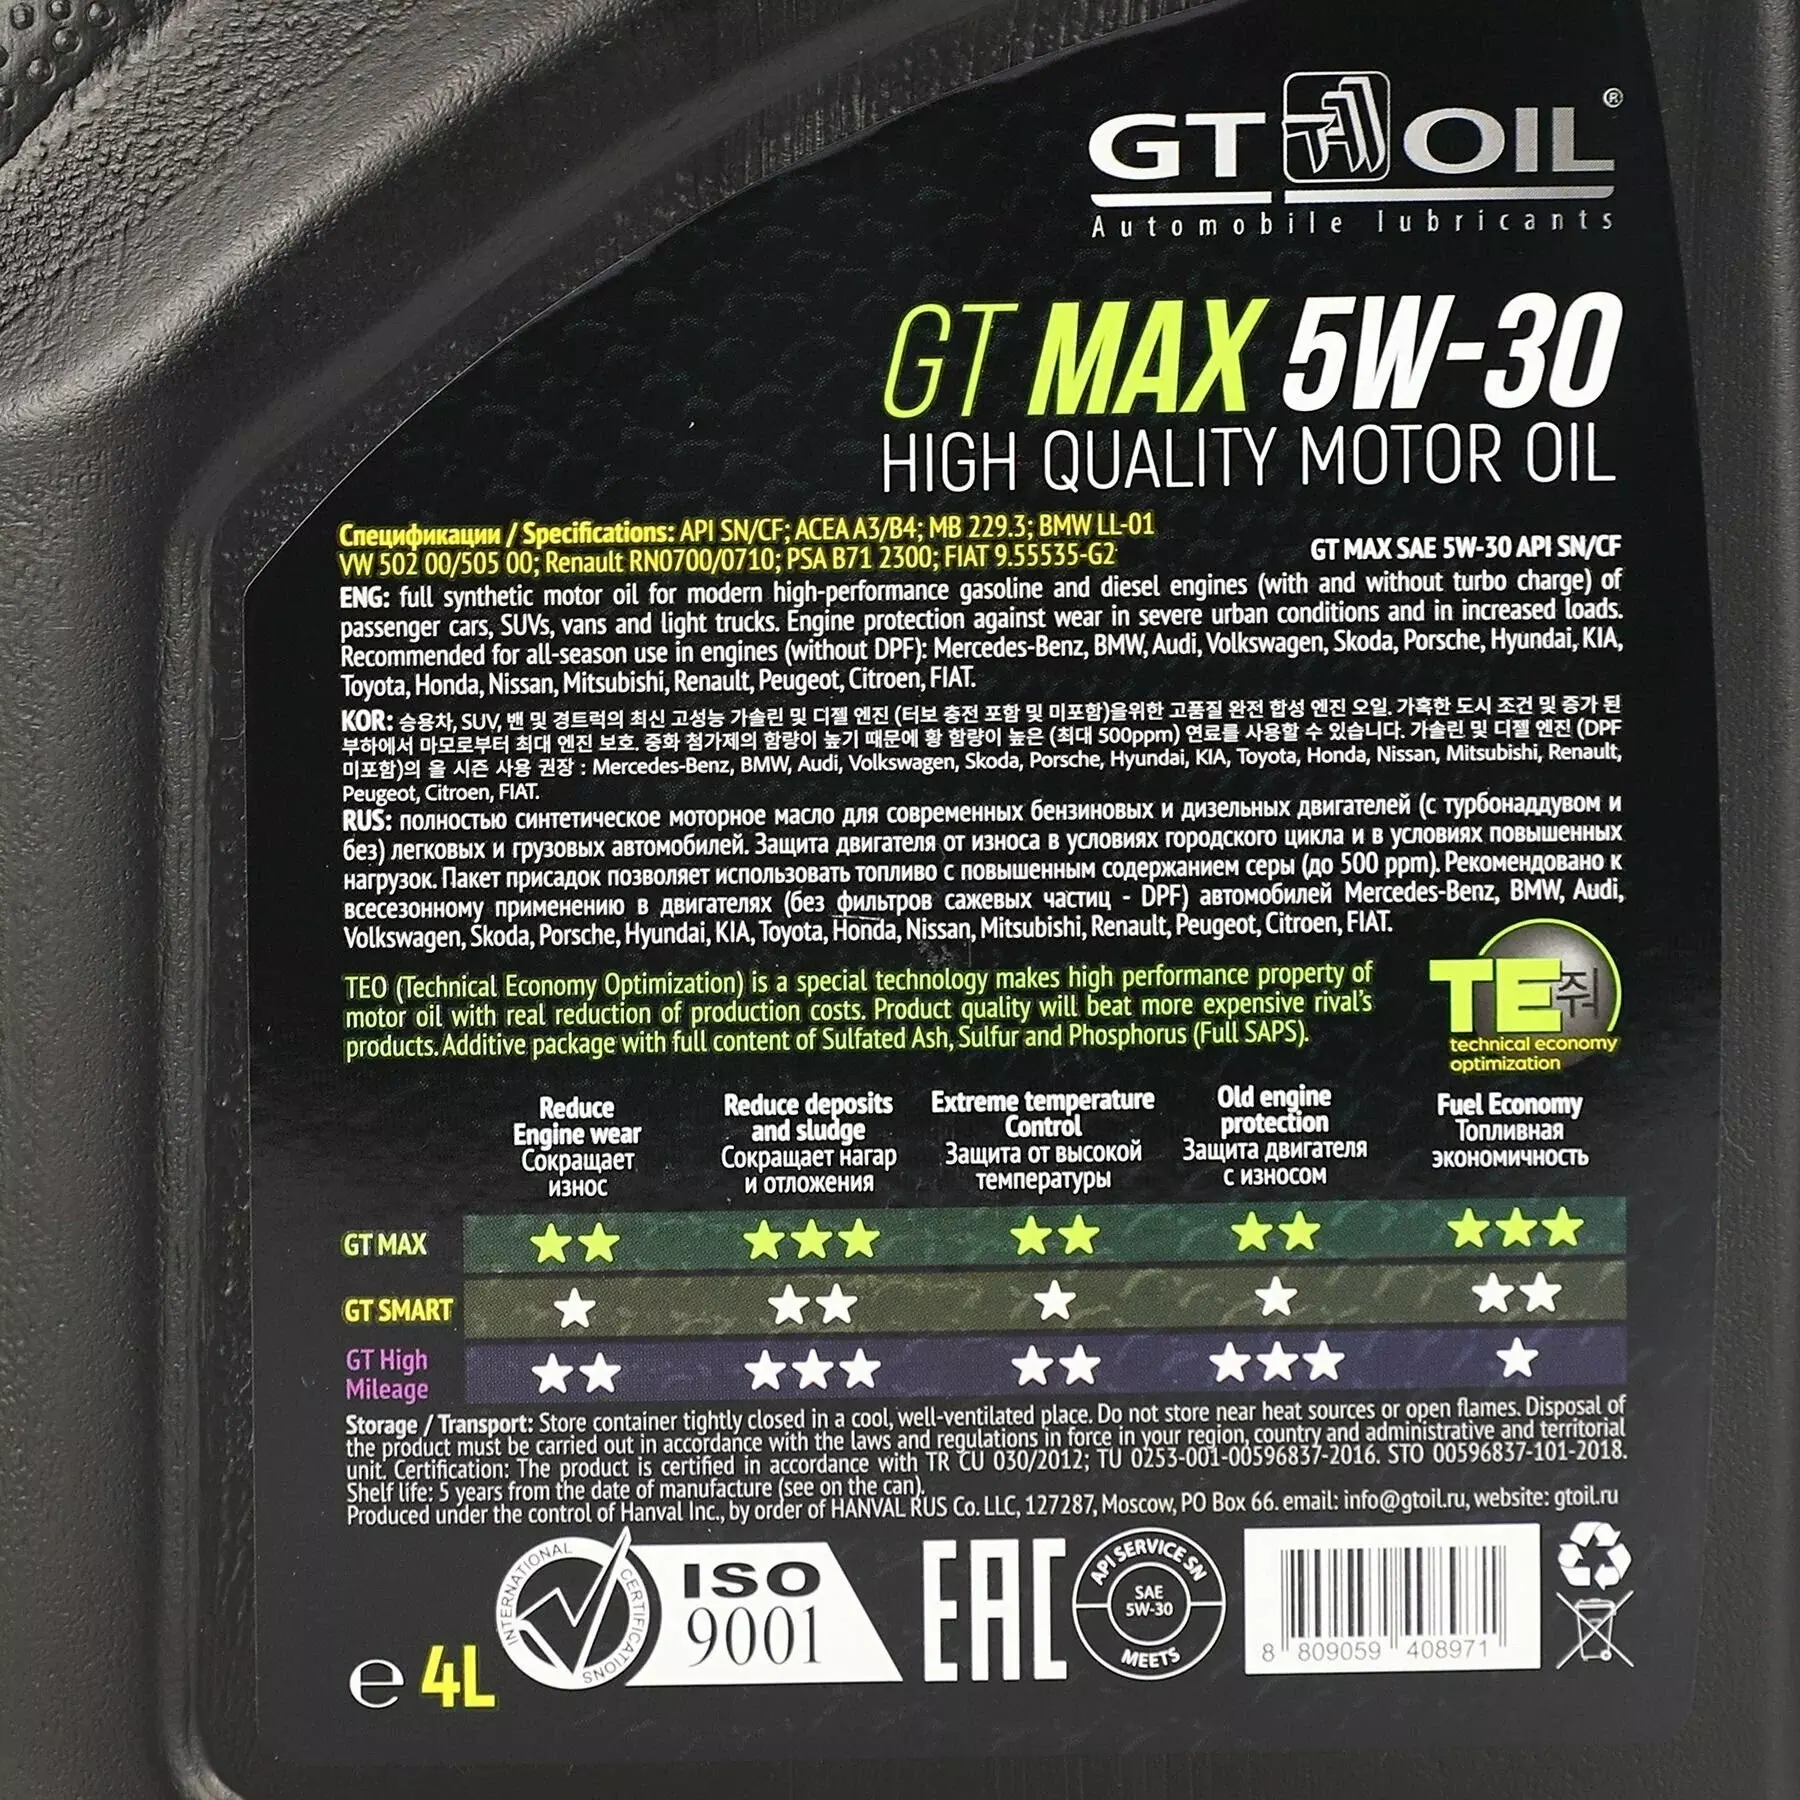 Полусинтетическое моторное масло GT OIL GT Smart 5W-30, 4 л